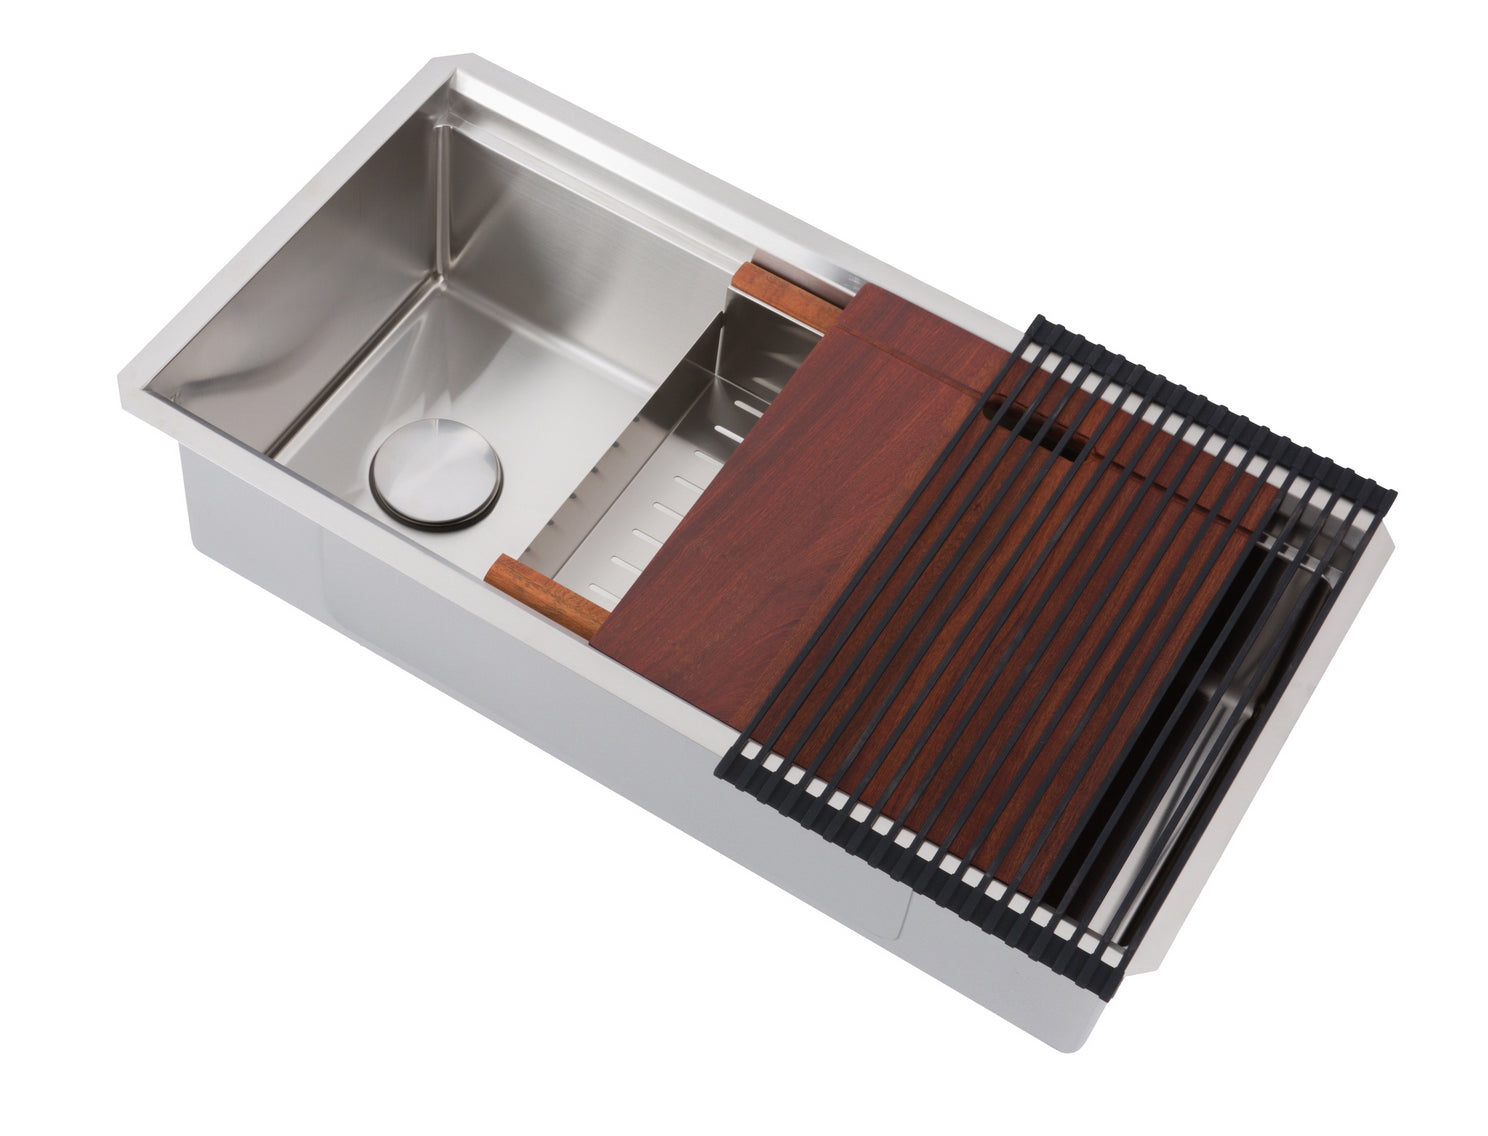 Workstation Undermount 16 Gauge Stainless Steel Single Bowl Kitchen Sink w/ Integrated Ledge, 15mm Tight Radius with Premium Accessories